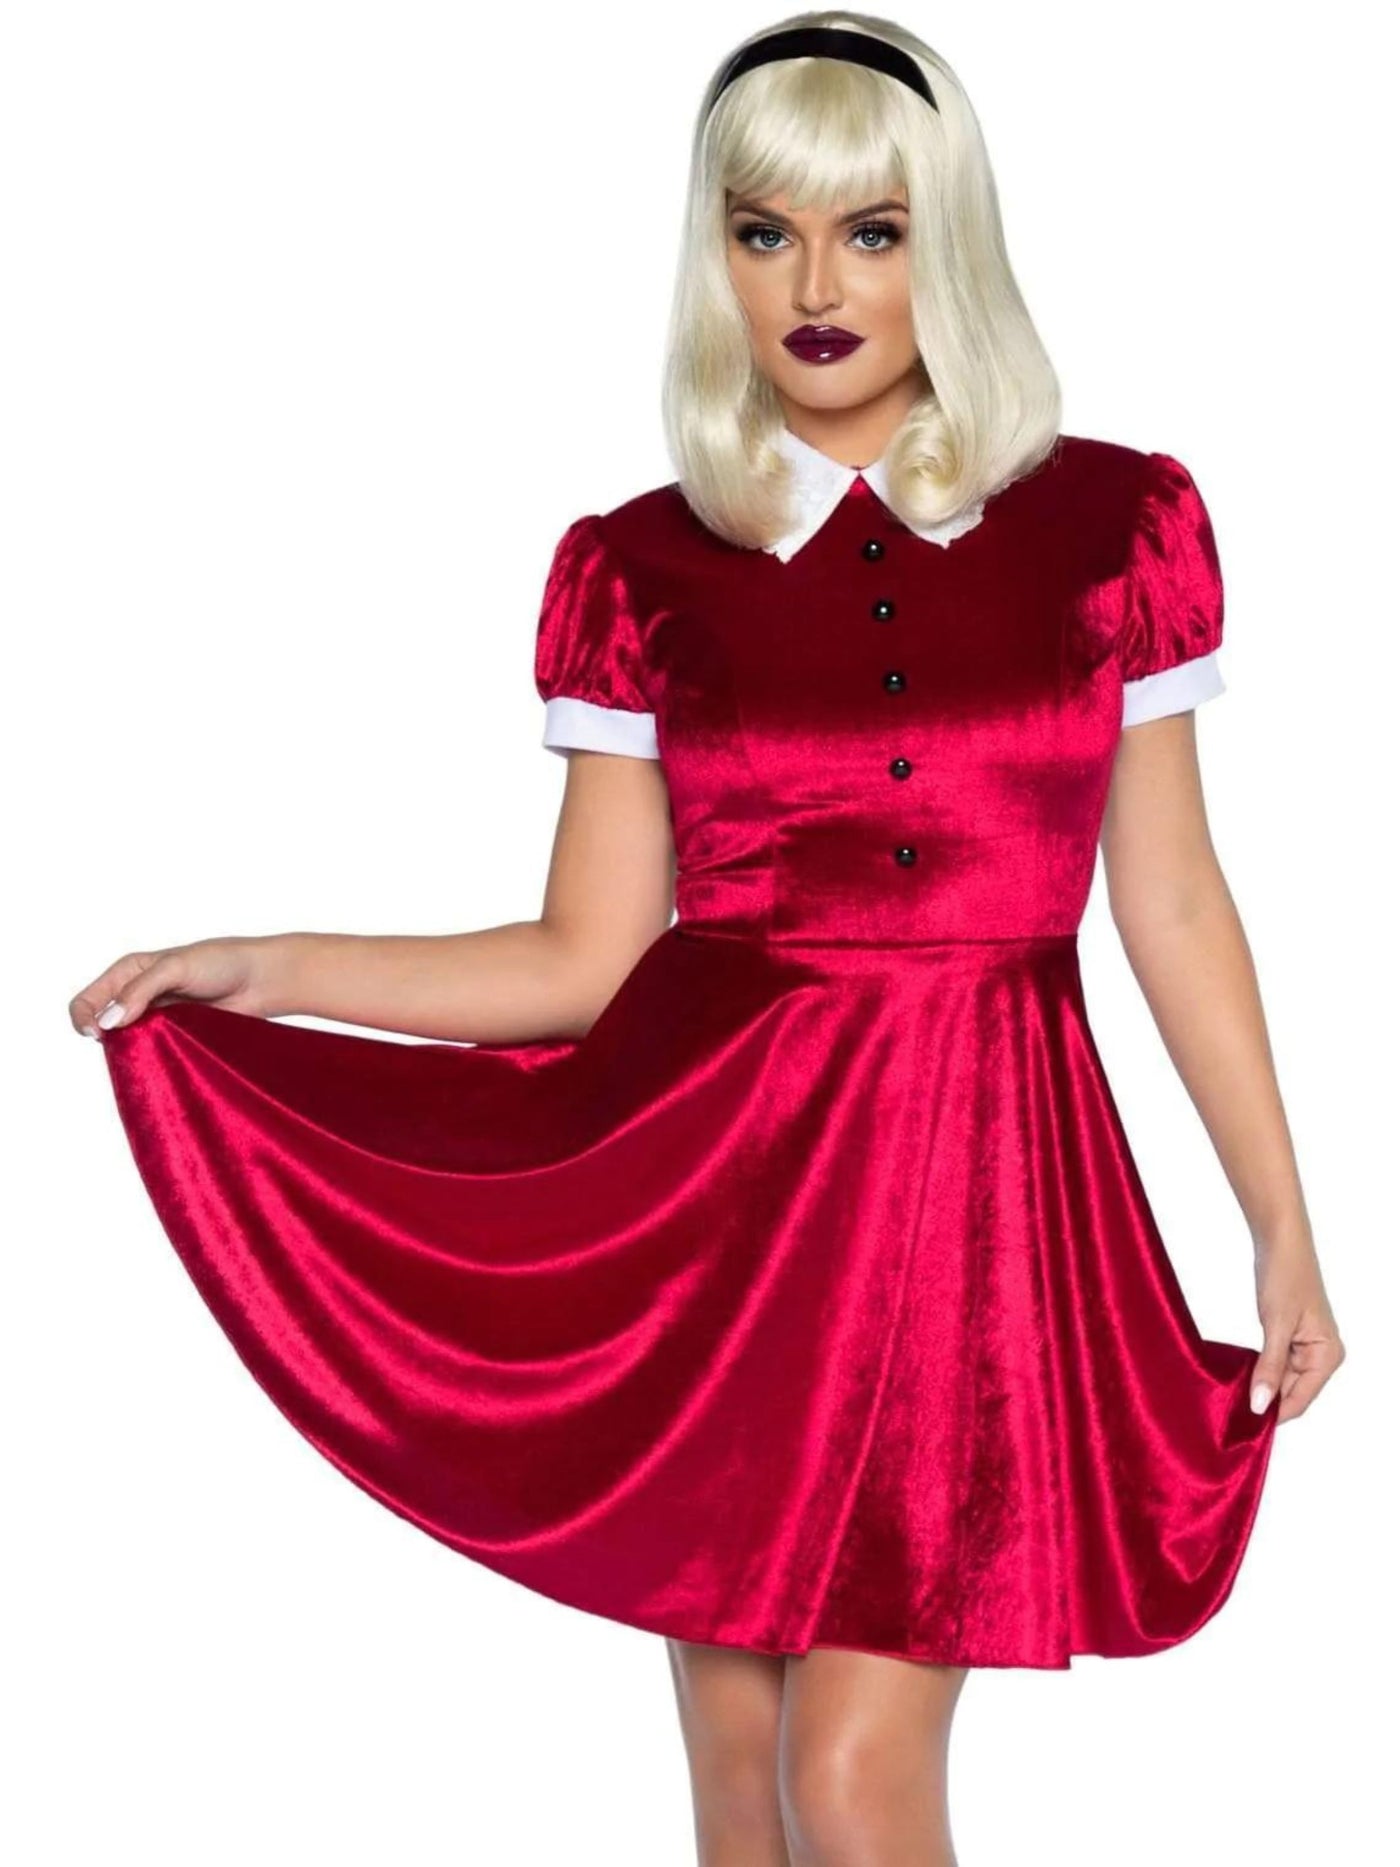 Sabrina The Teenage Witch Costume